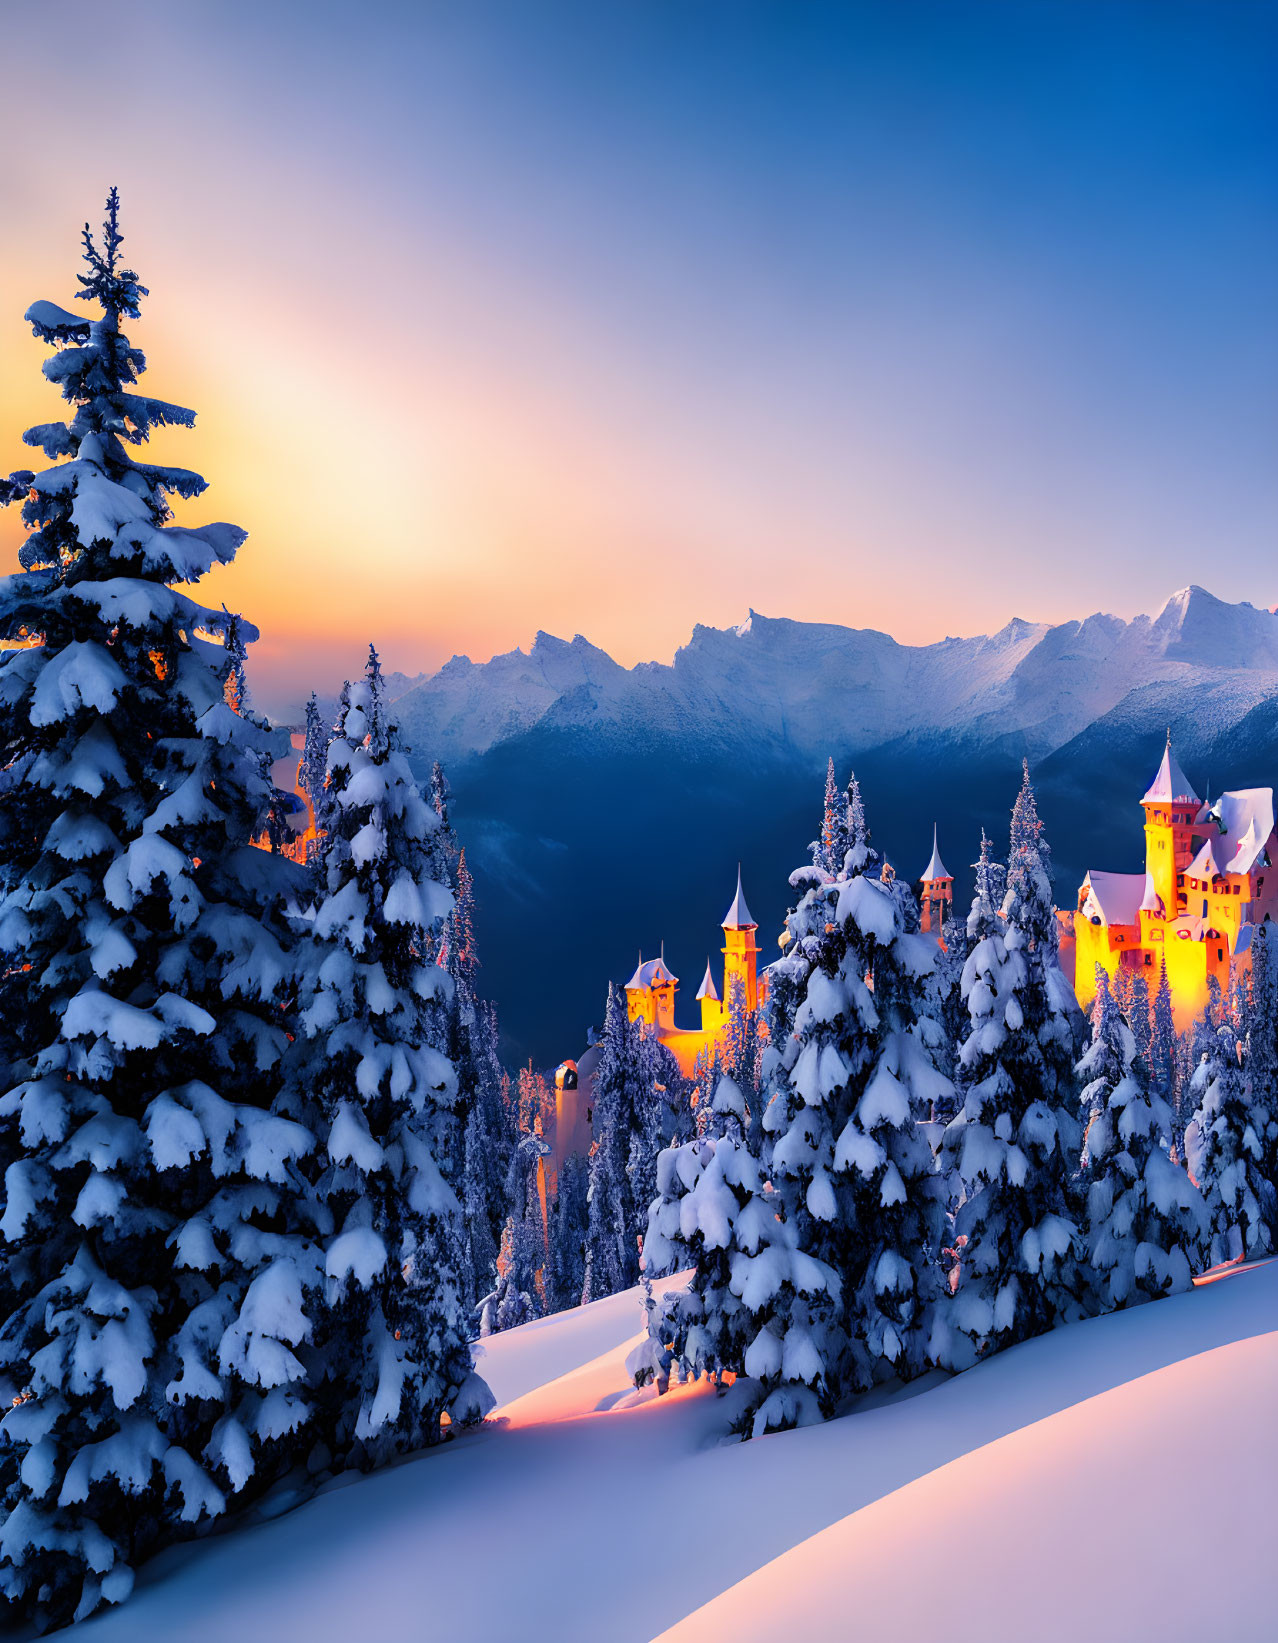 Twilight scene: Snow-covered pine trees, castle, mountains, gradient sky